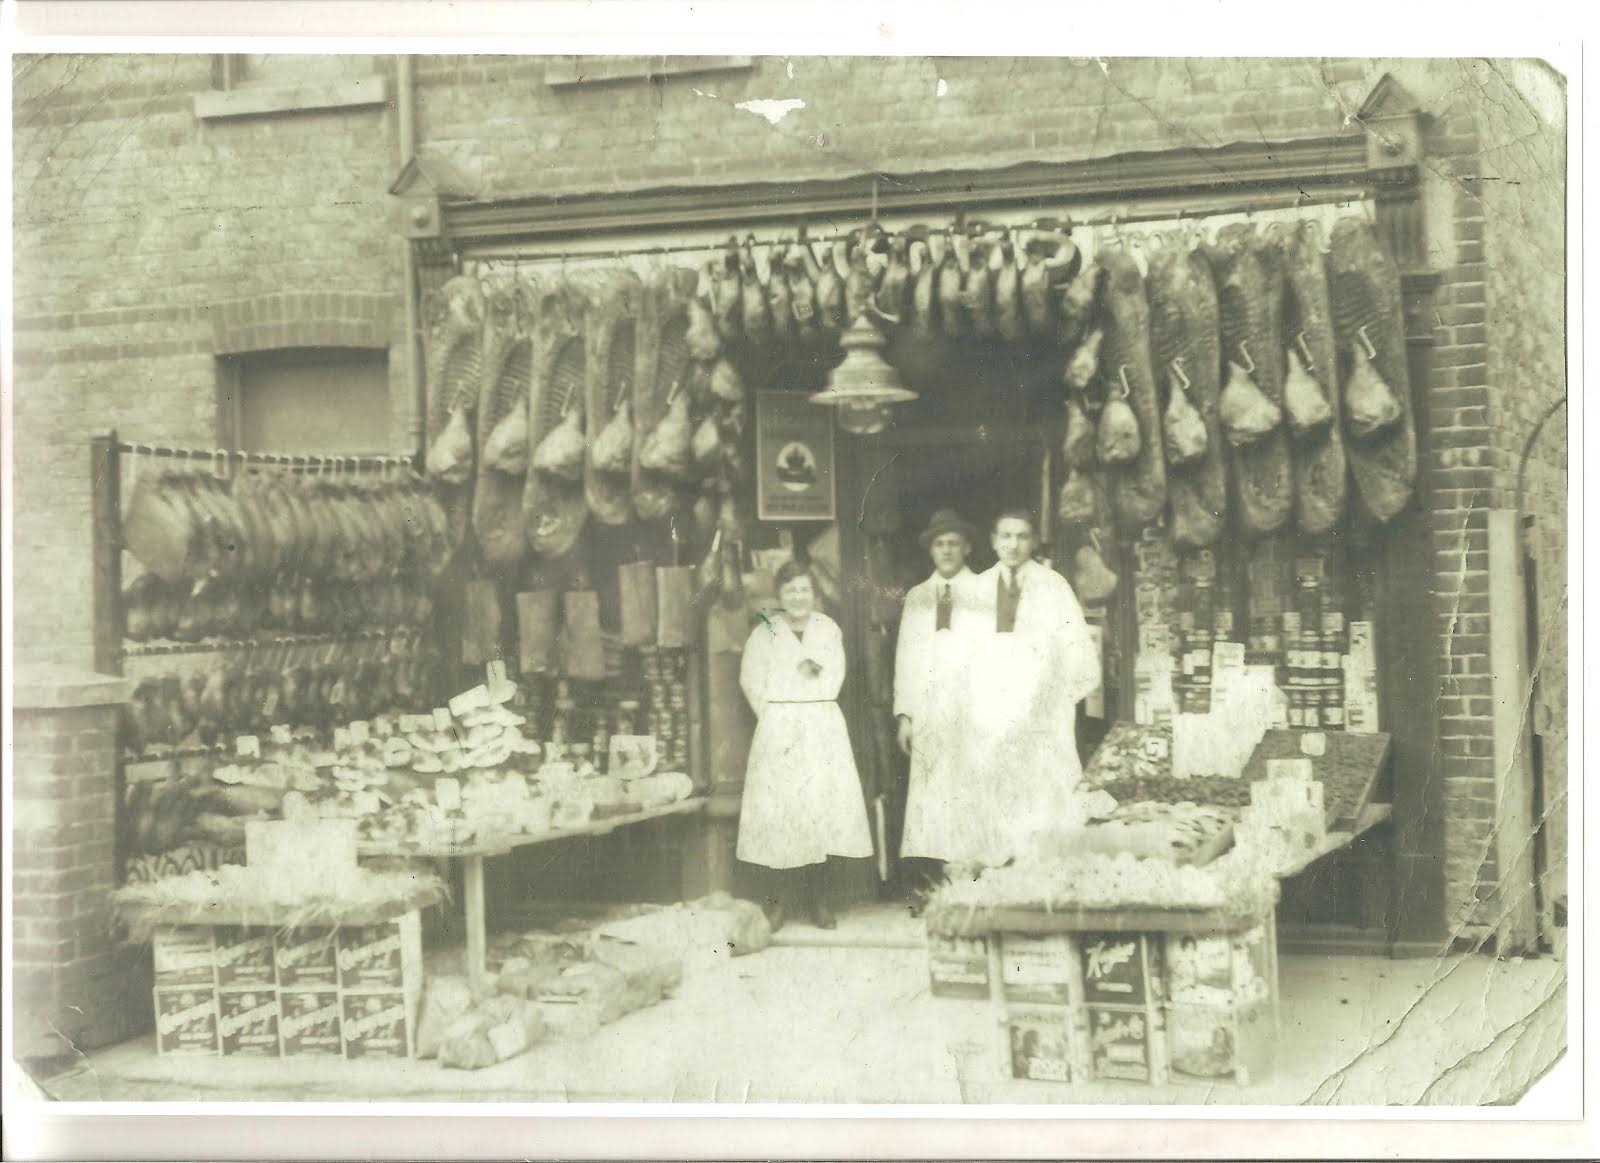 Jacobs Shop Station Road Rainham 1925